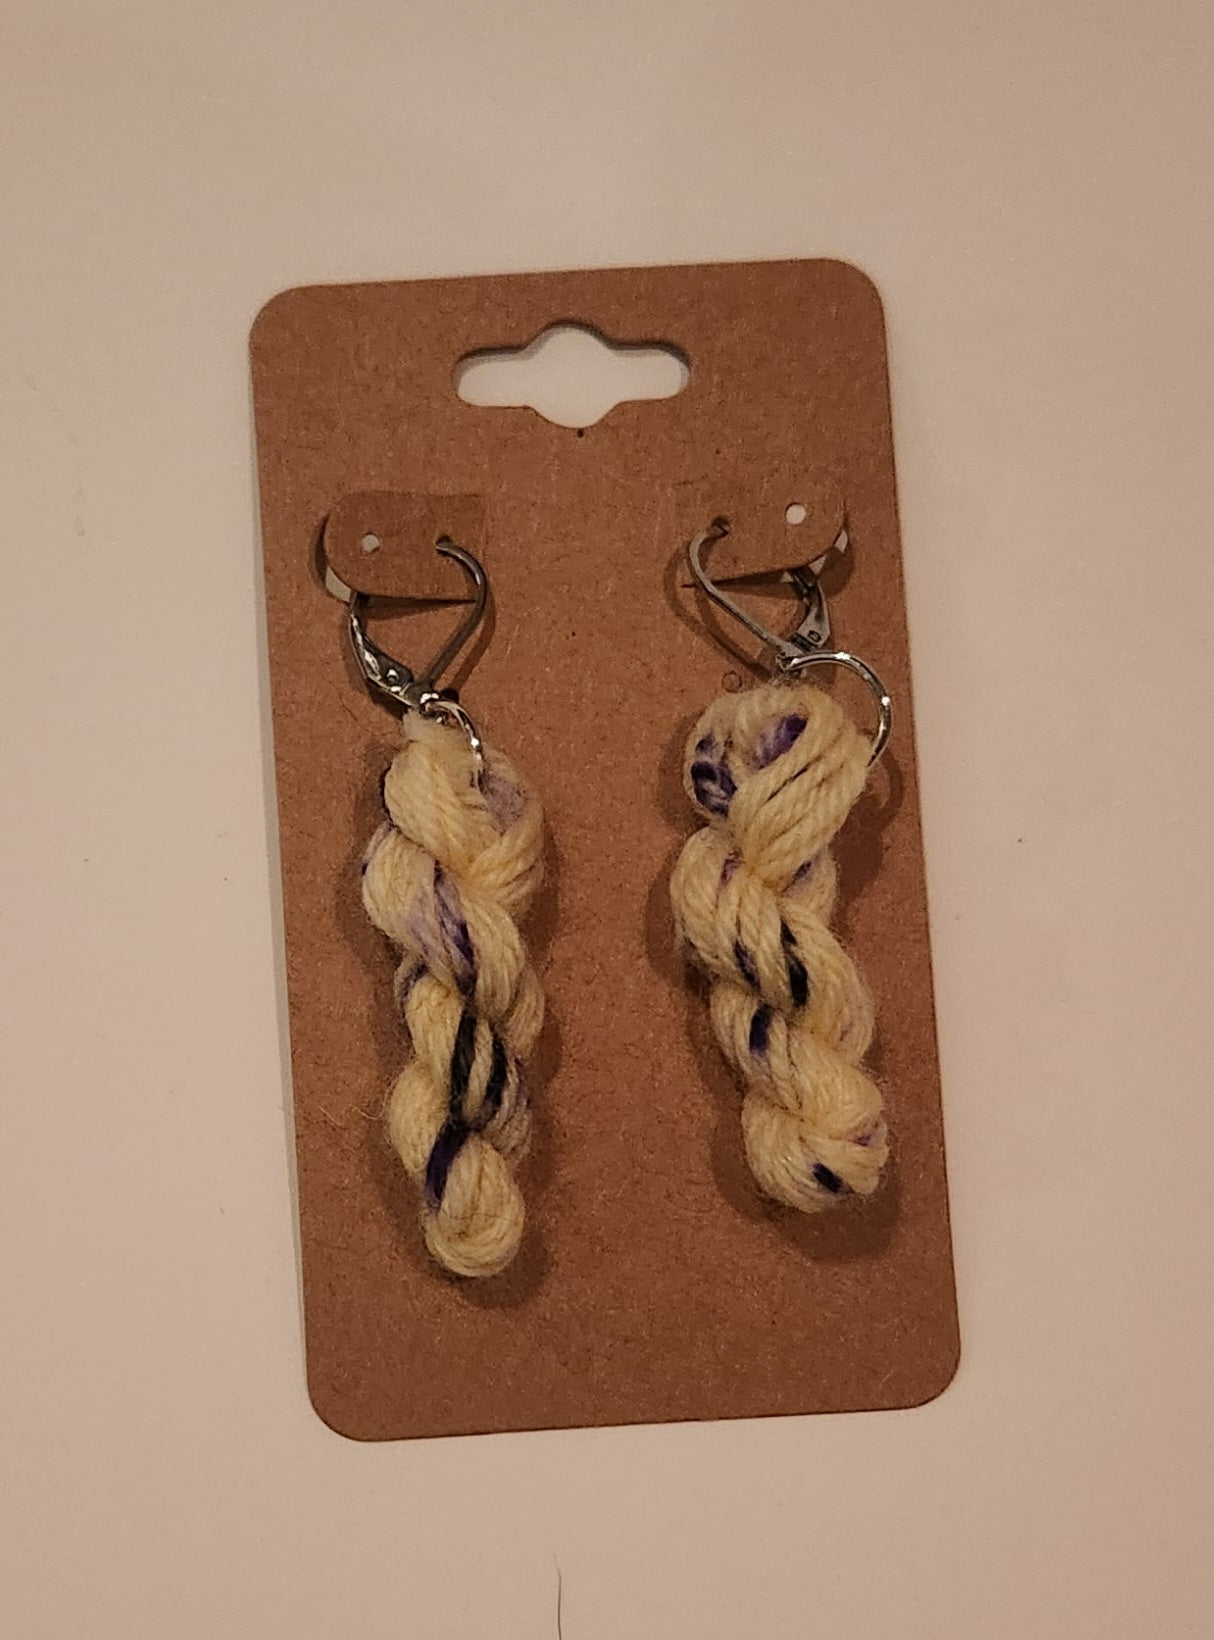 Mini skein earrings